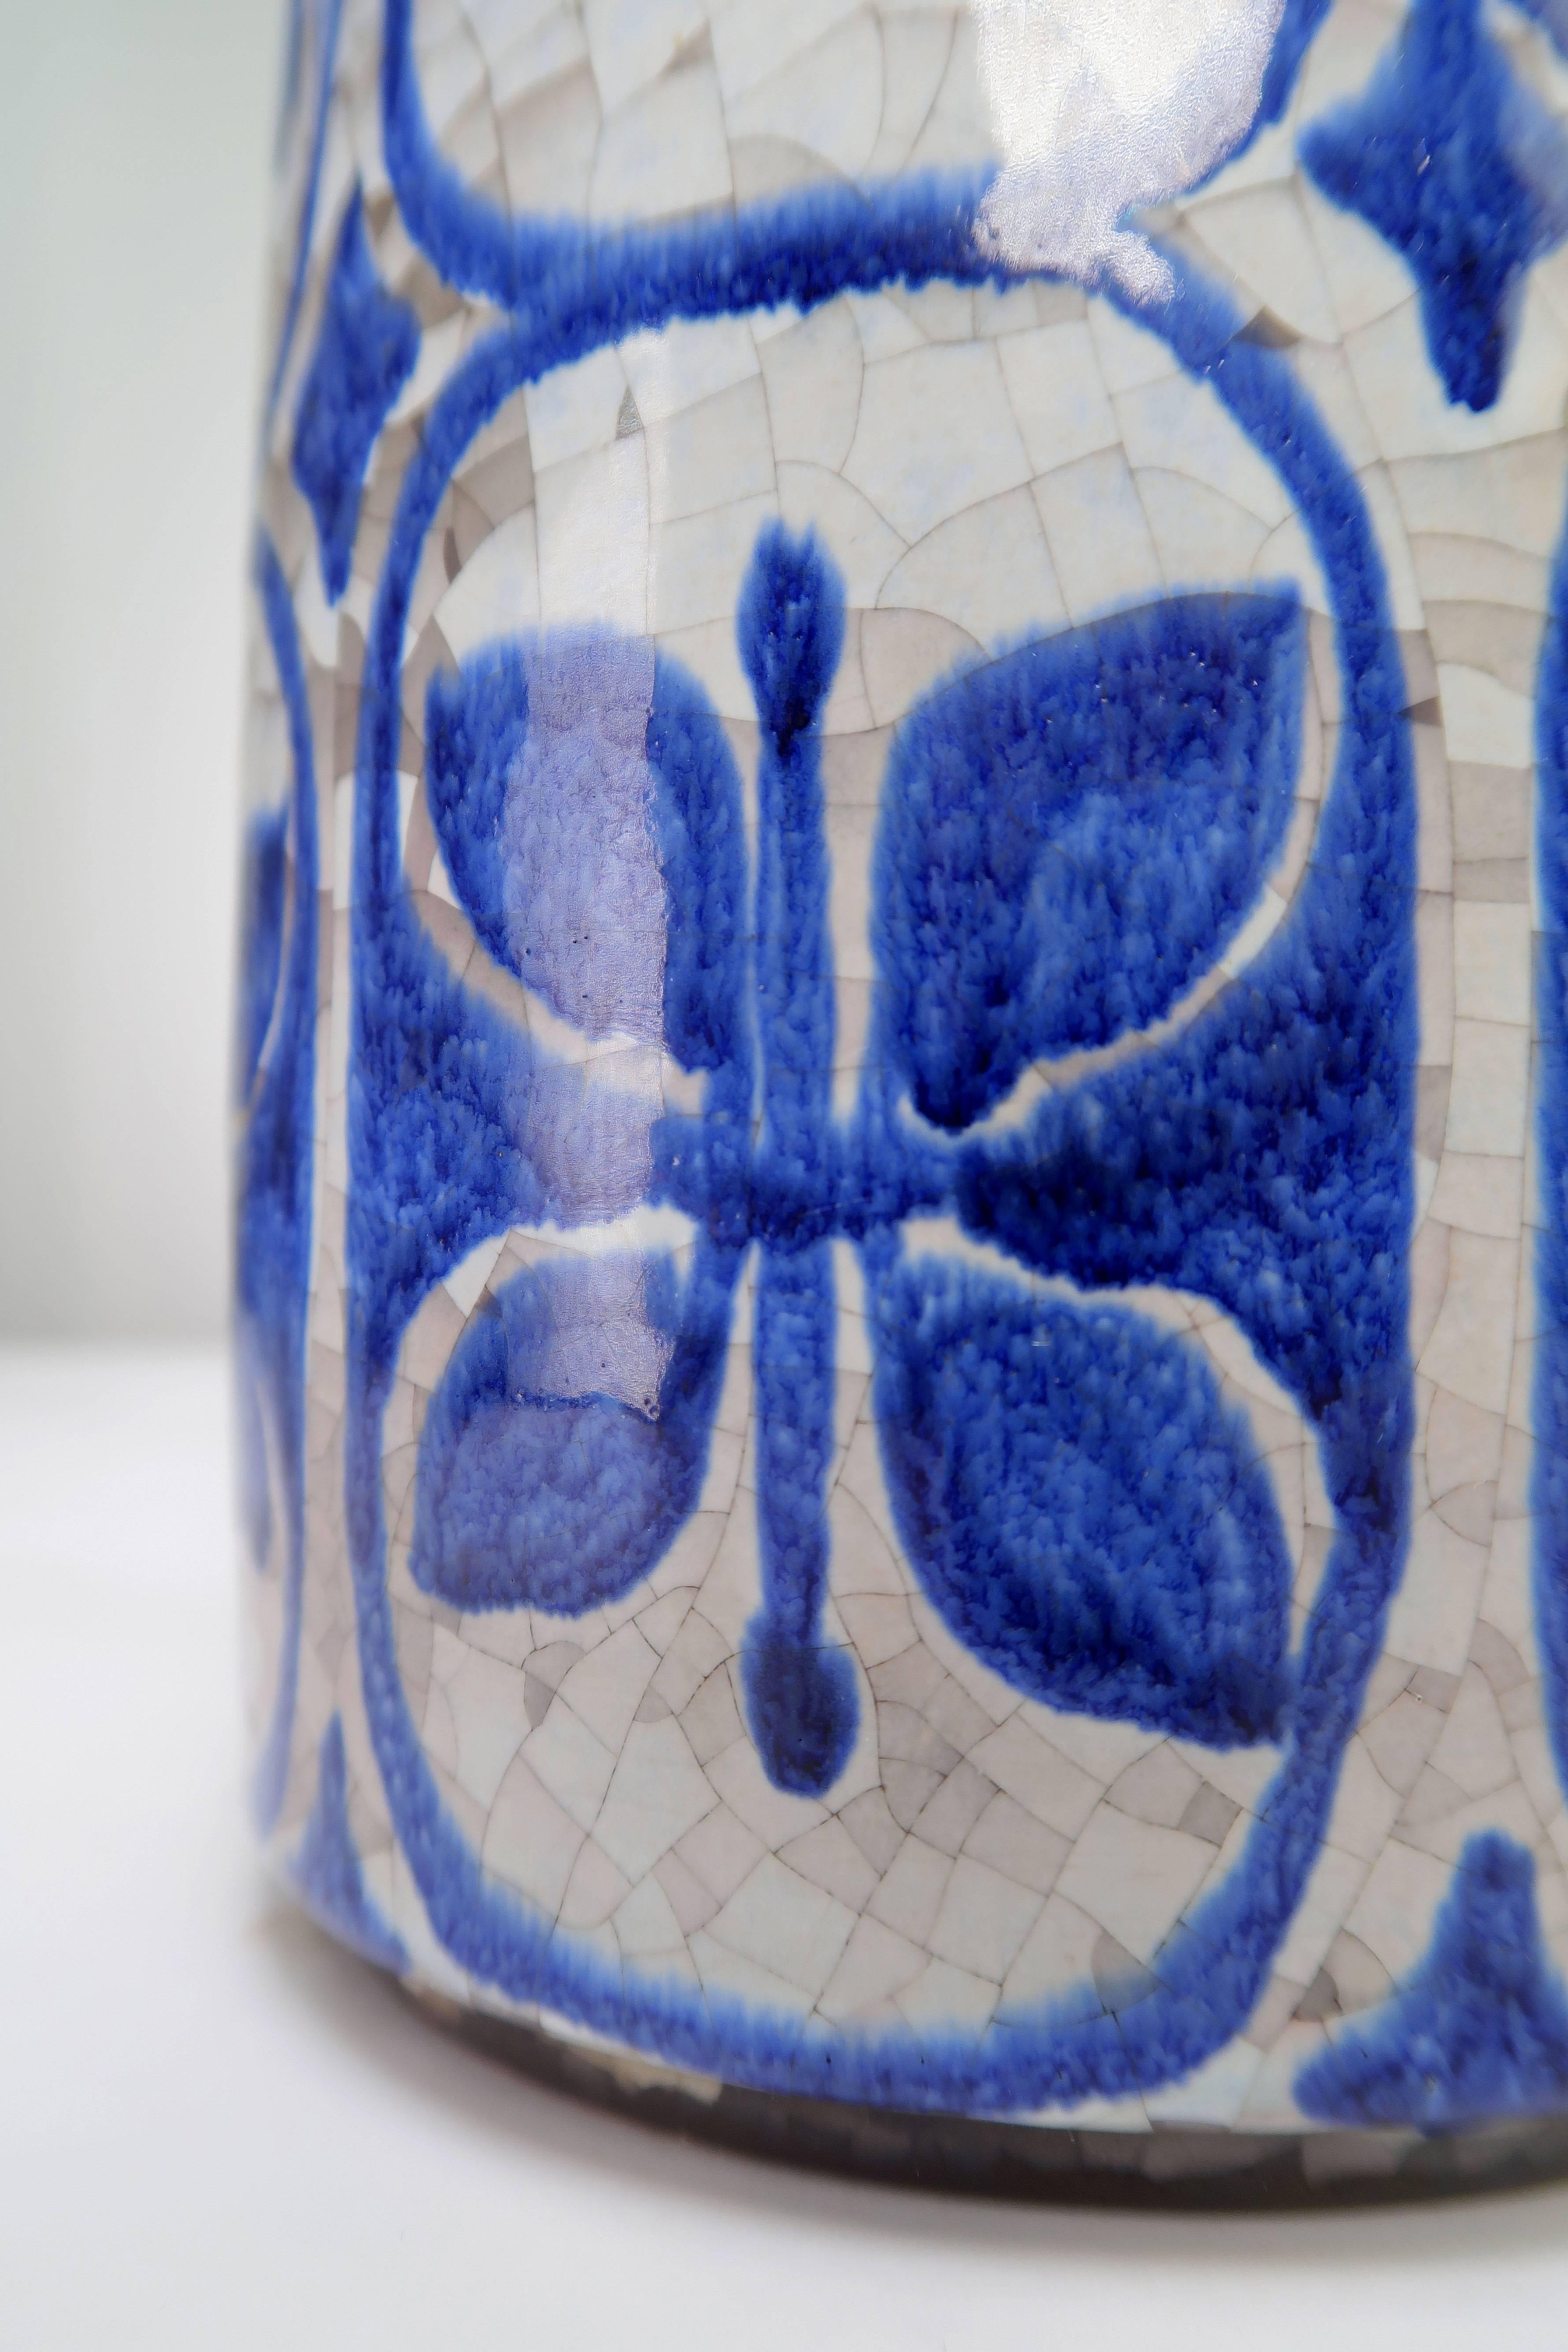 Glazed Marianne Starck for Danish Michael Andersen Blue, Grey Butterfly Lamps, 1960s